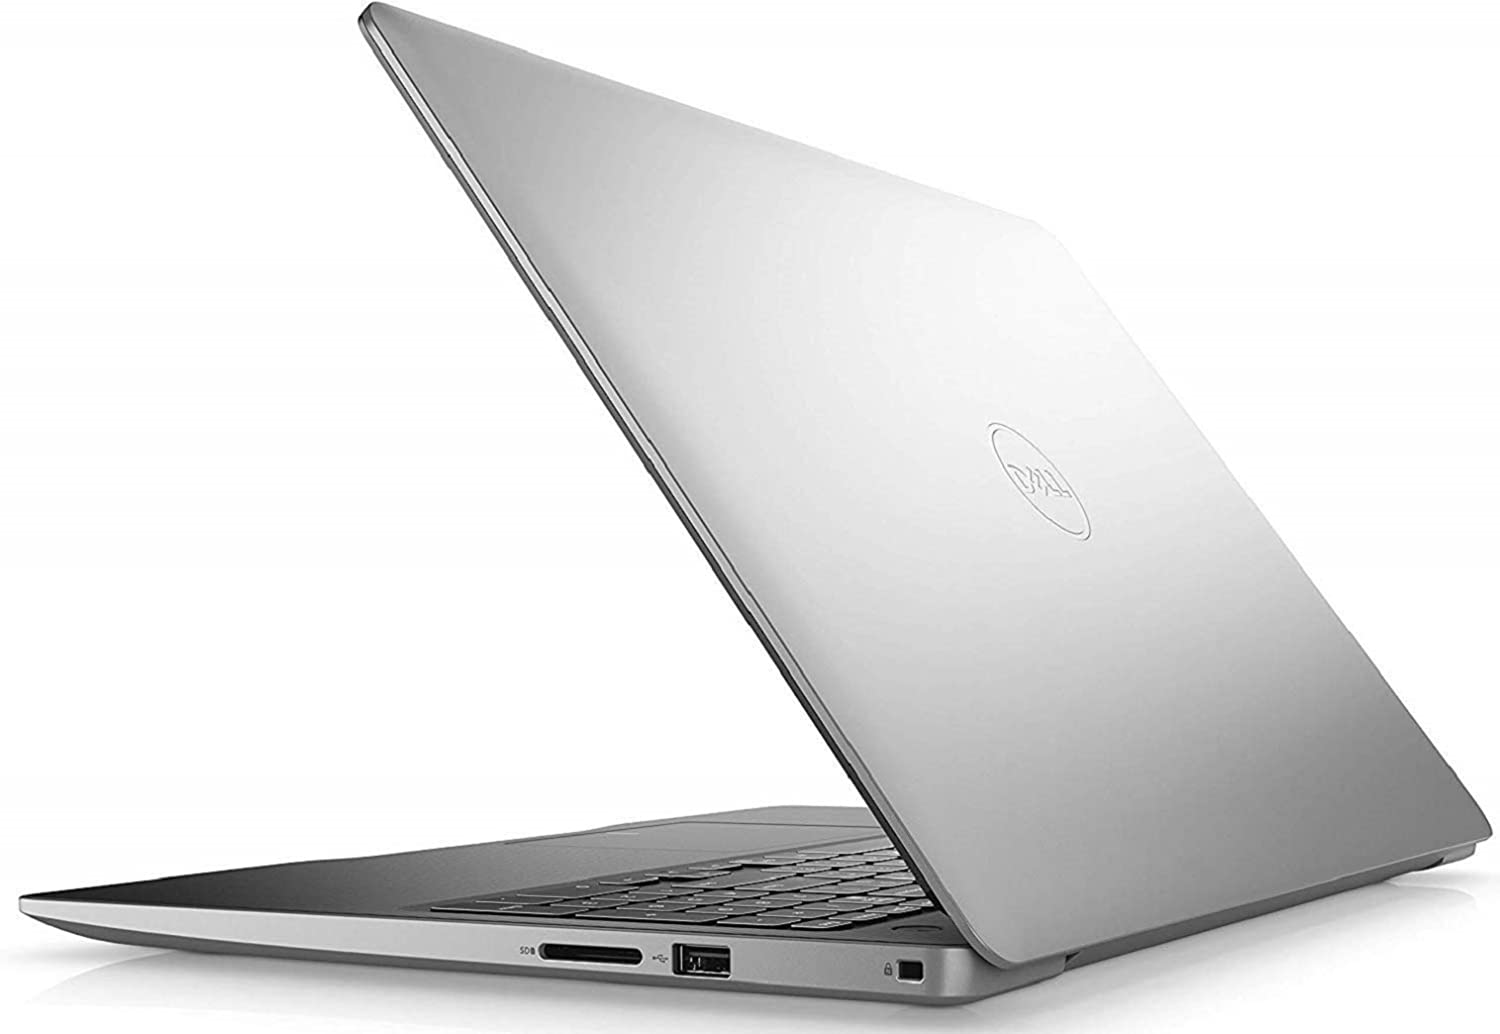 Review: Dell Vostro 15 3583 Laptop